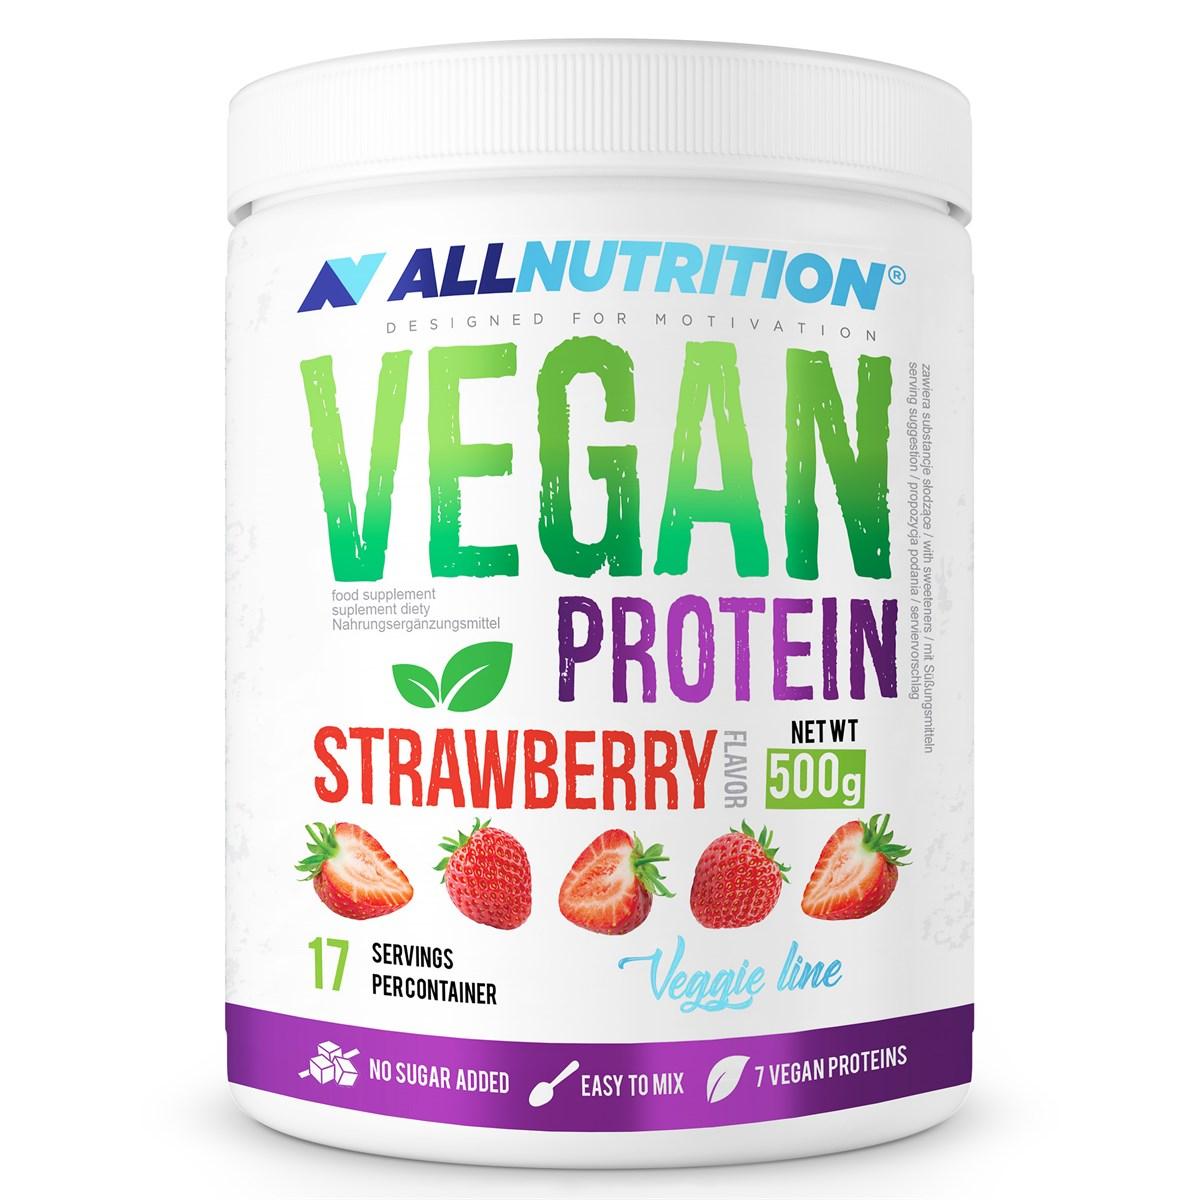 Vegan Pea Protein - 500g Salted Caramel,  мл, AllNutrition. Растительный протеин. 